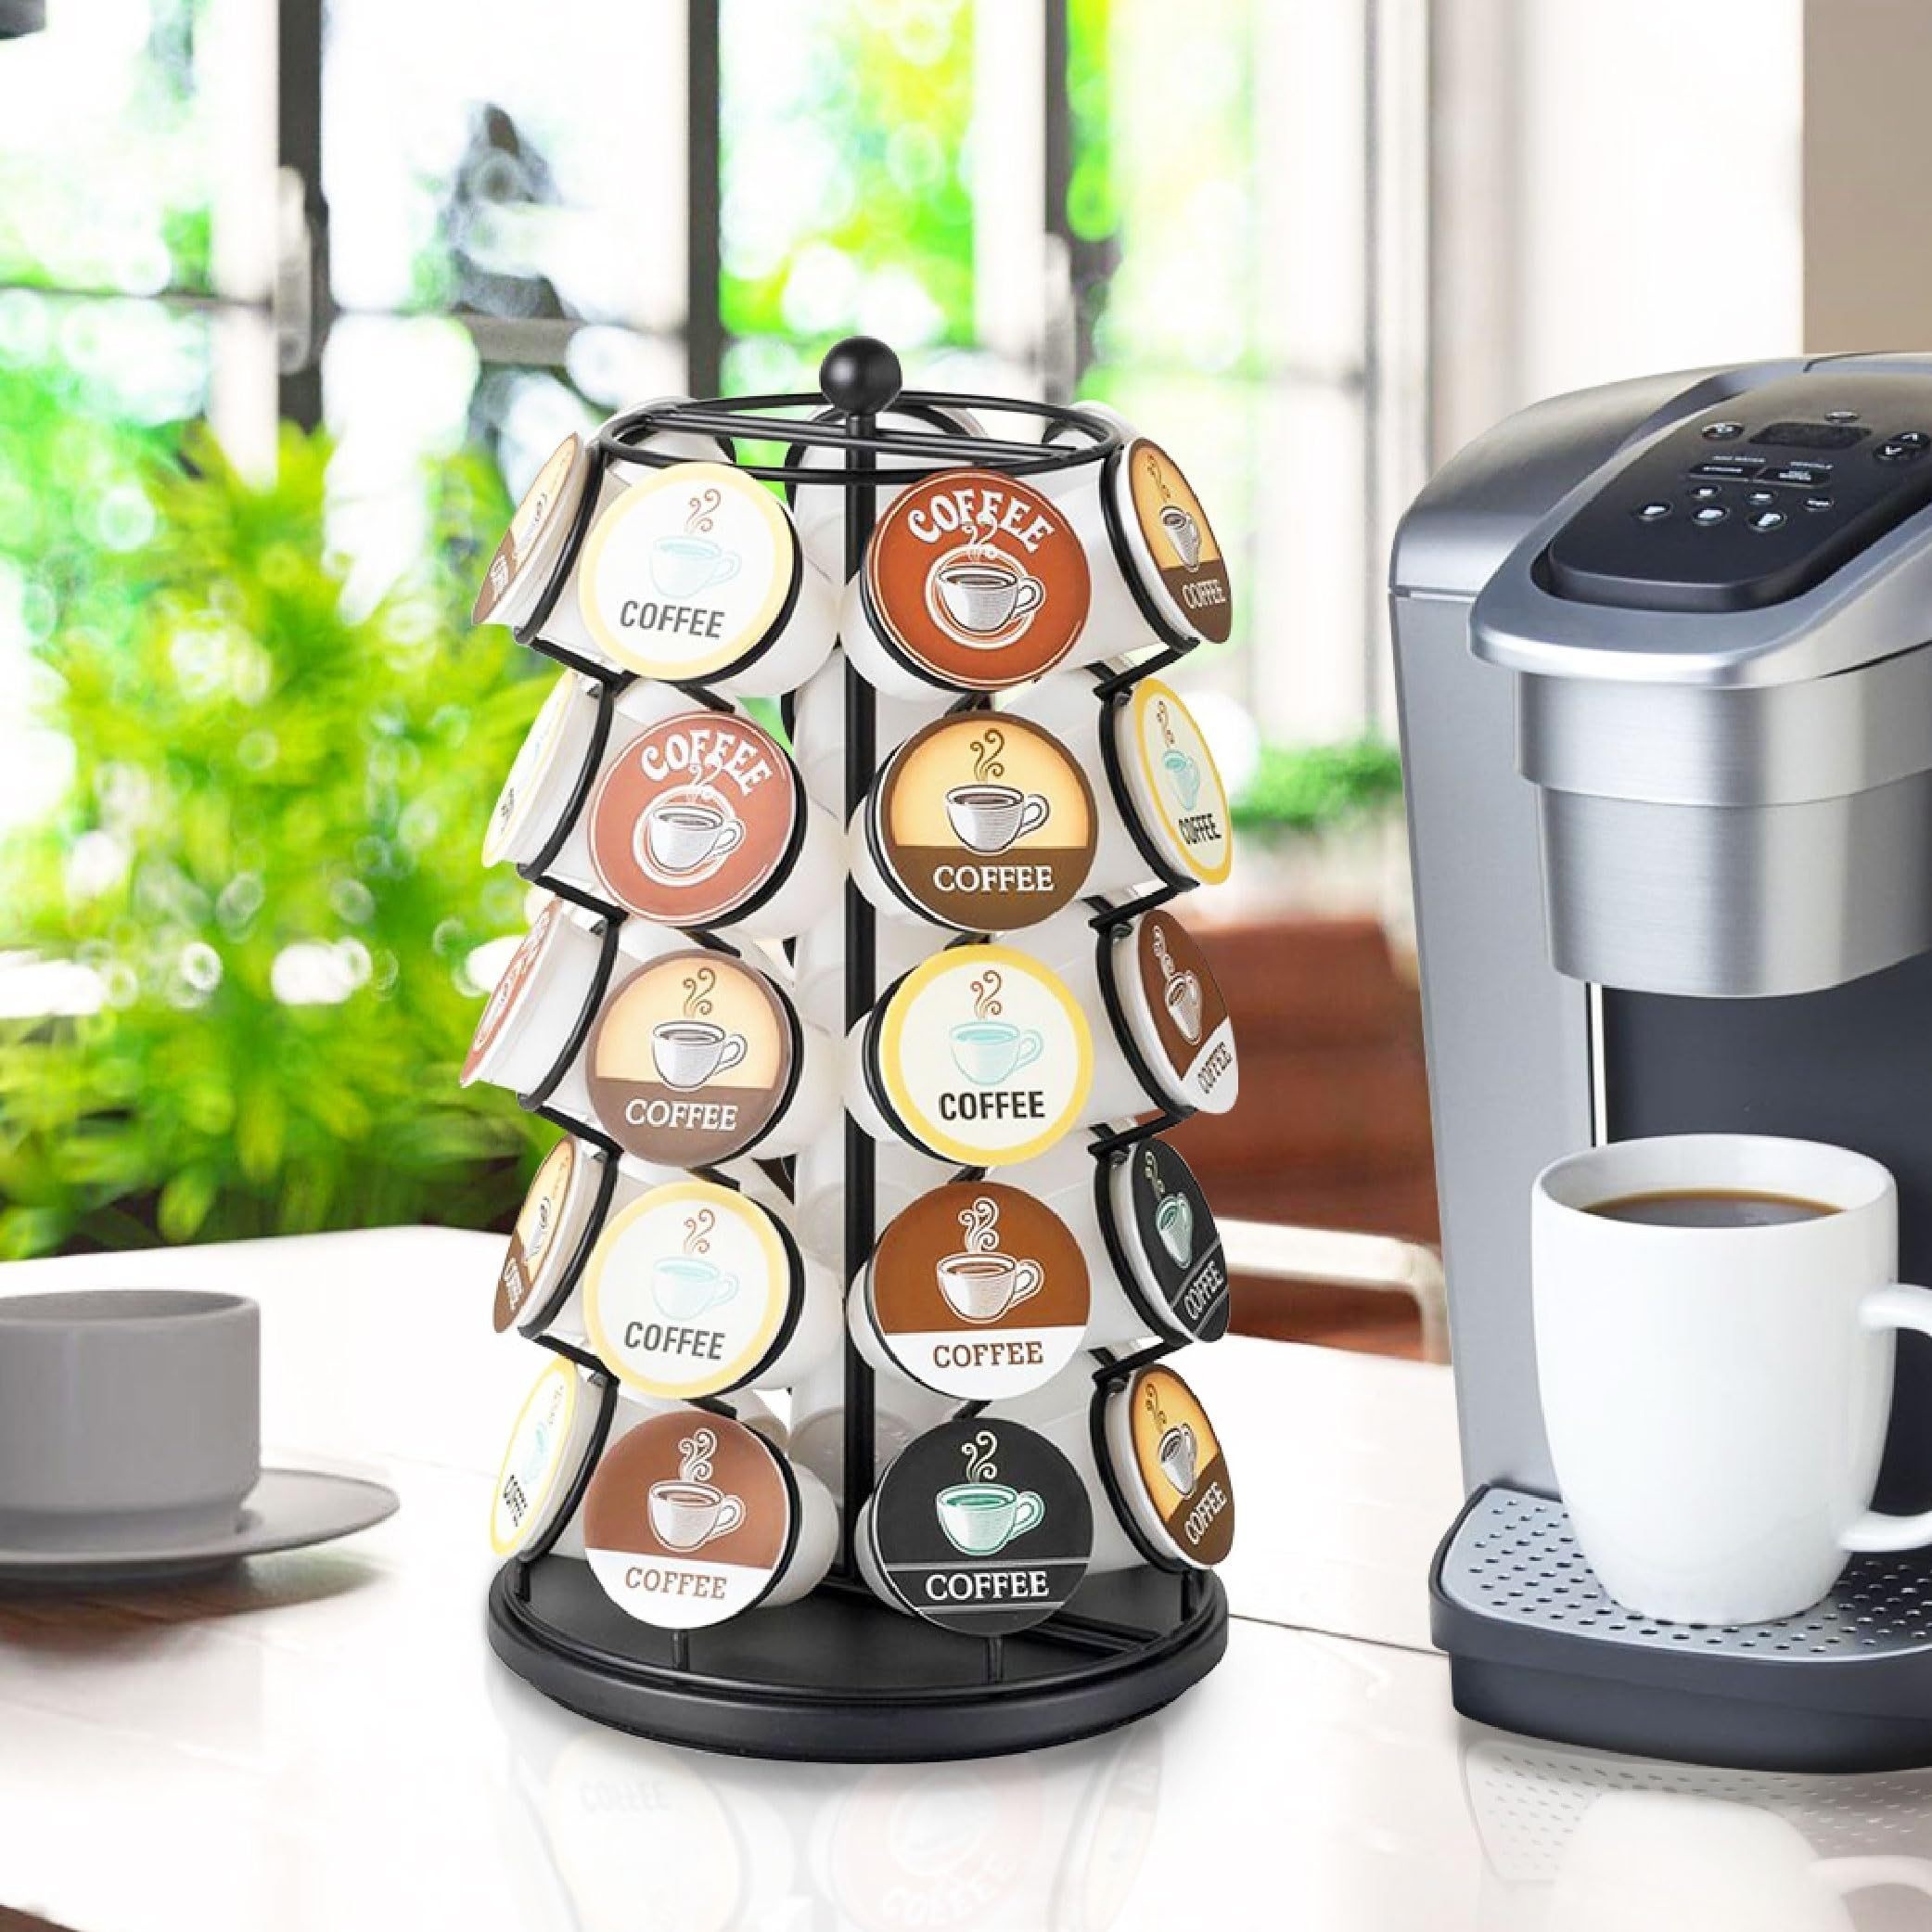 COFFEE K-CUP HOLDER Wrought Iron Mug Keurig Pod Storage Rack USA